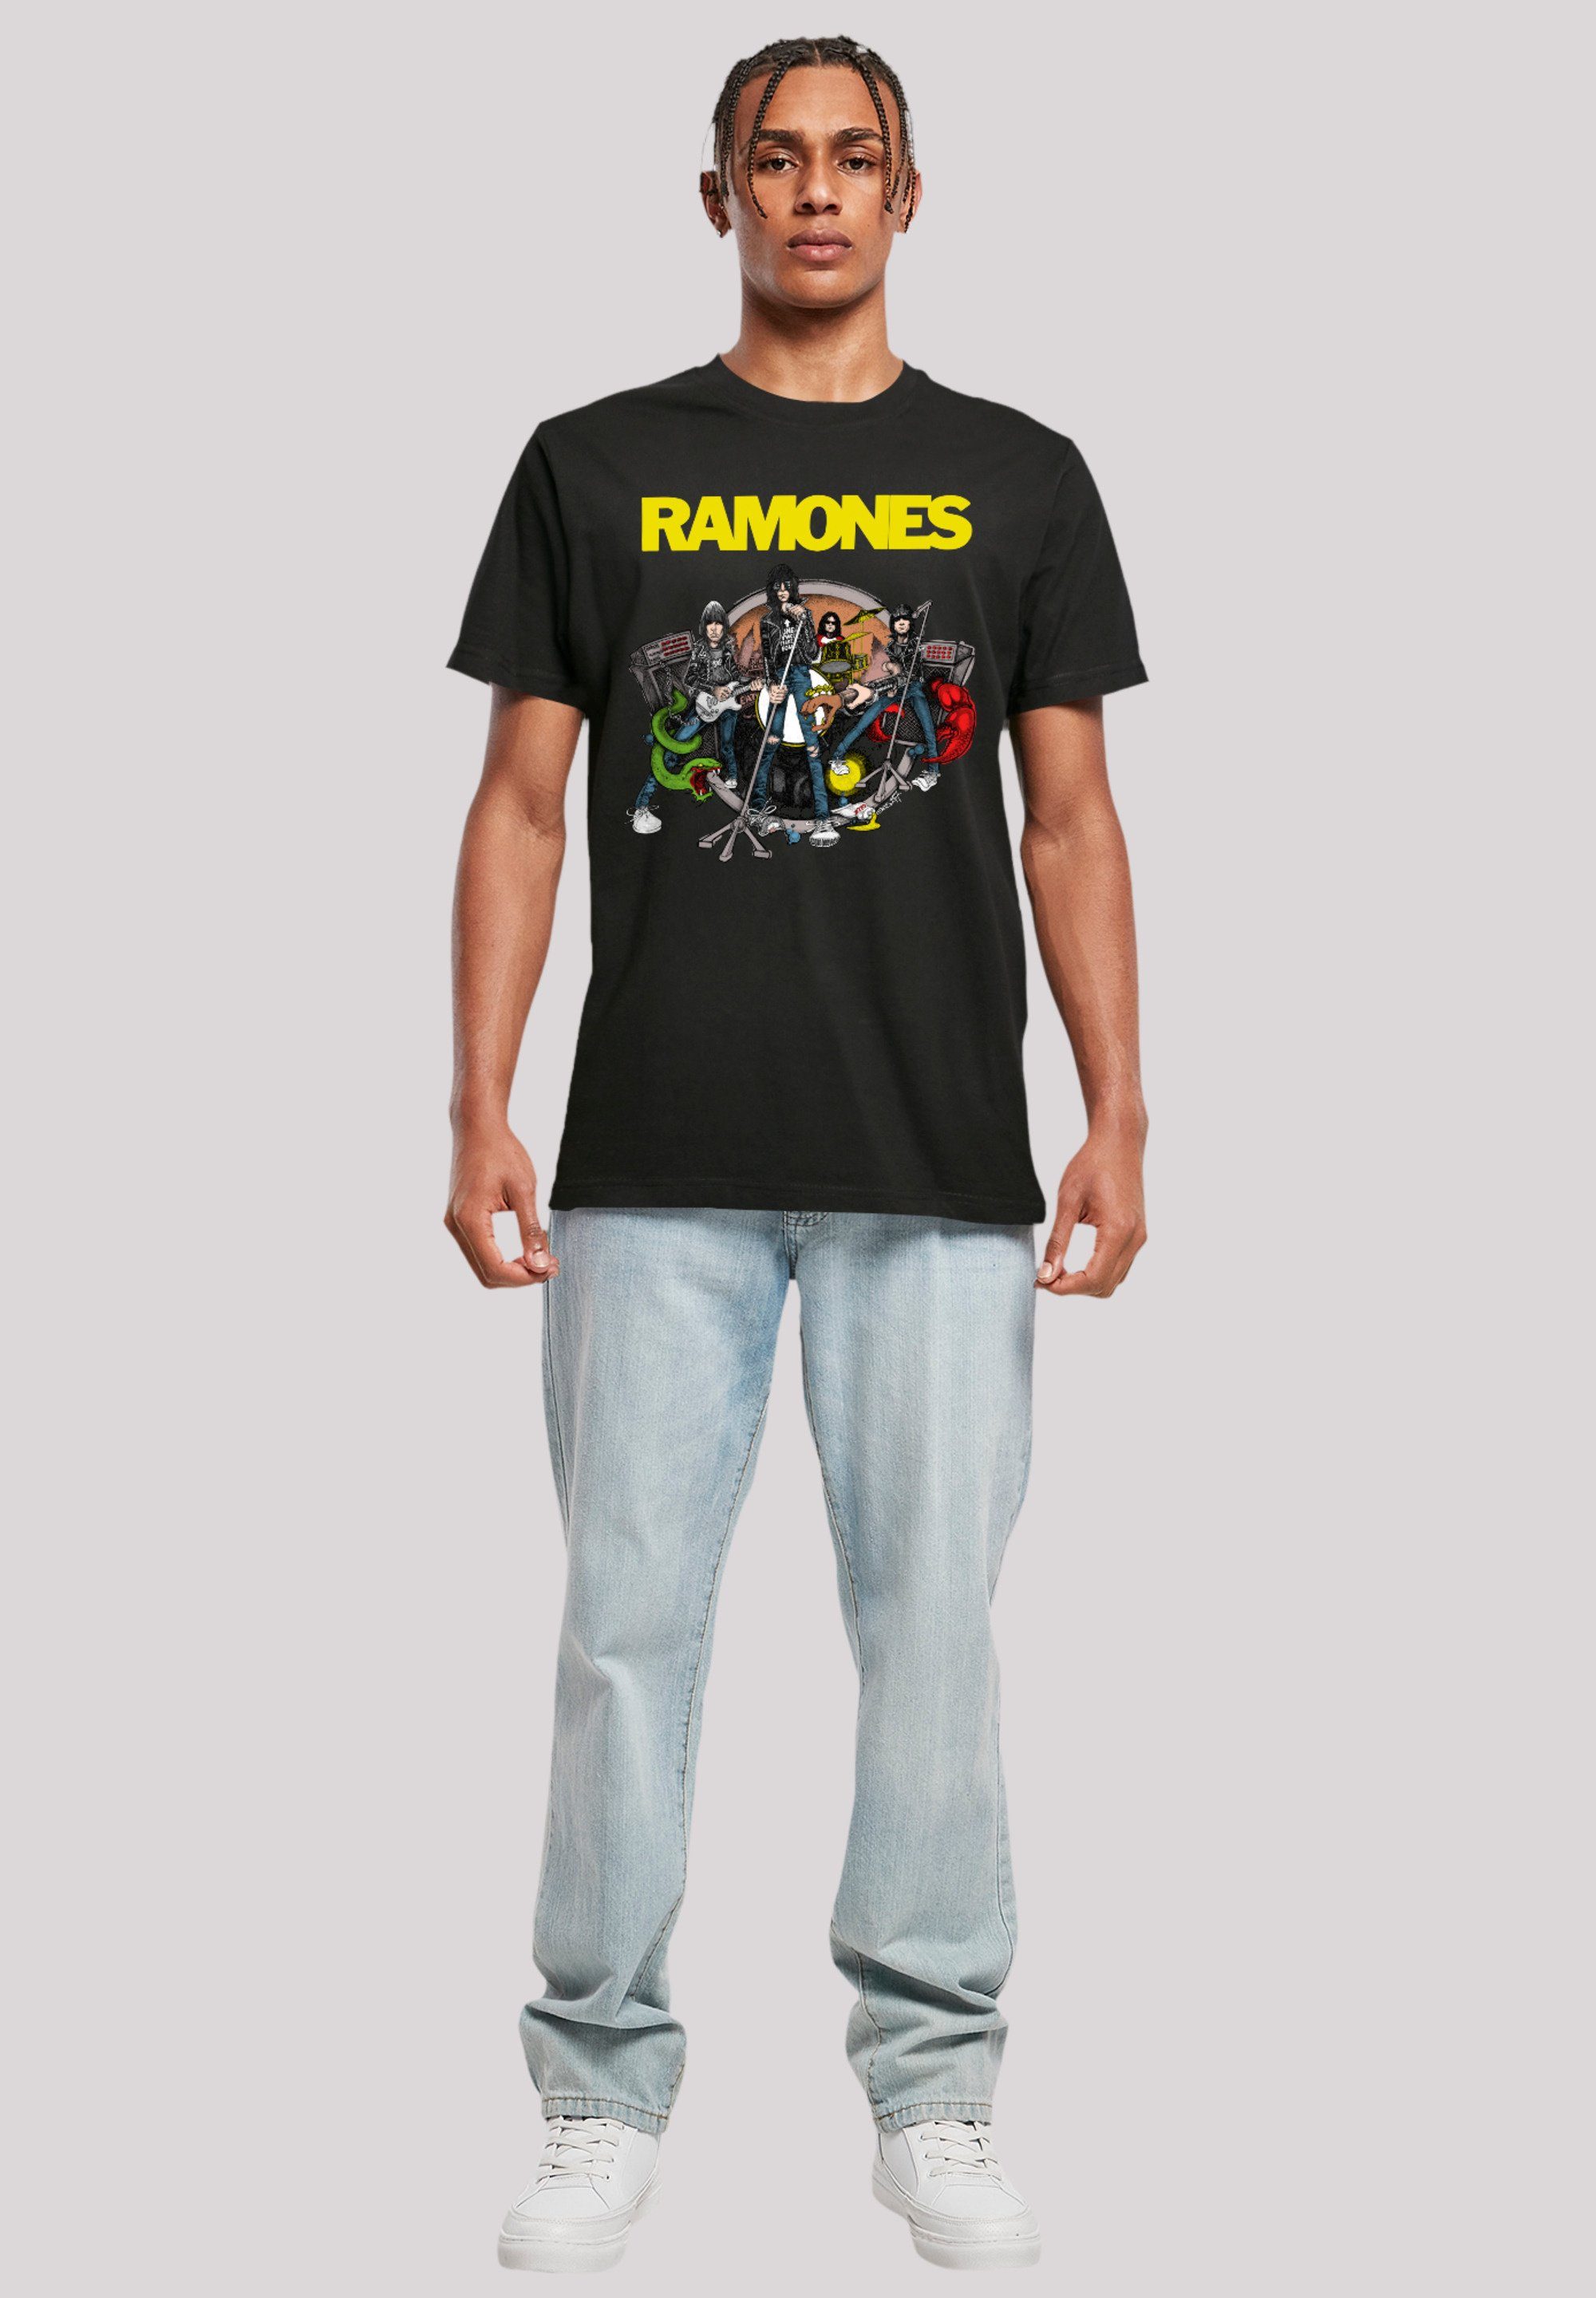 F4NT4STIC T-Shirt Ramones Rock Musik Road Band, Premium Band Rock-Musik Ruin Qualität, To